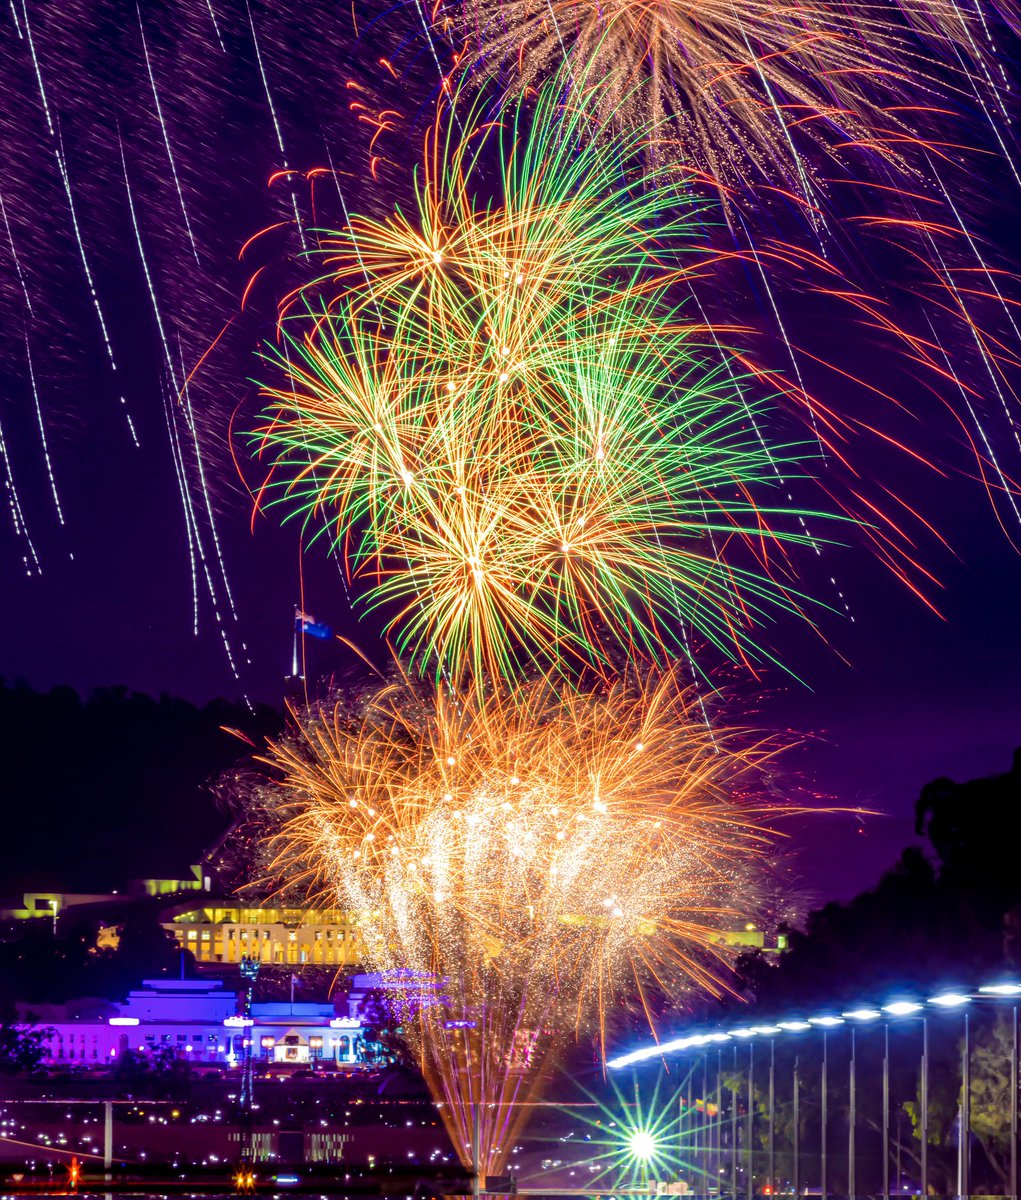 H E L L O   2 0 2 3 !

❤️❤️❤️

#happynewyear #2023 #newyear #celebration #spectacular #firework #parliamenthouse #oldparliamenthouse @visitcanberra @Australia